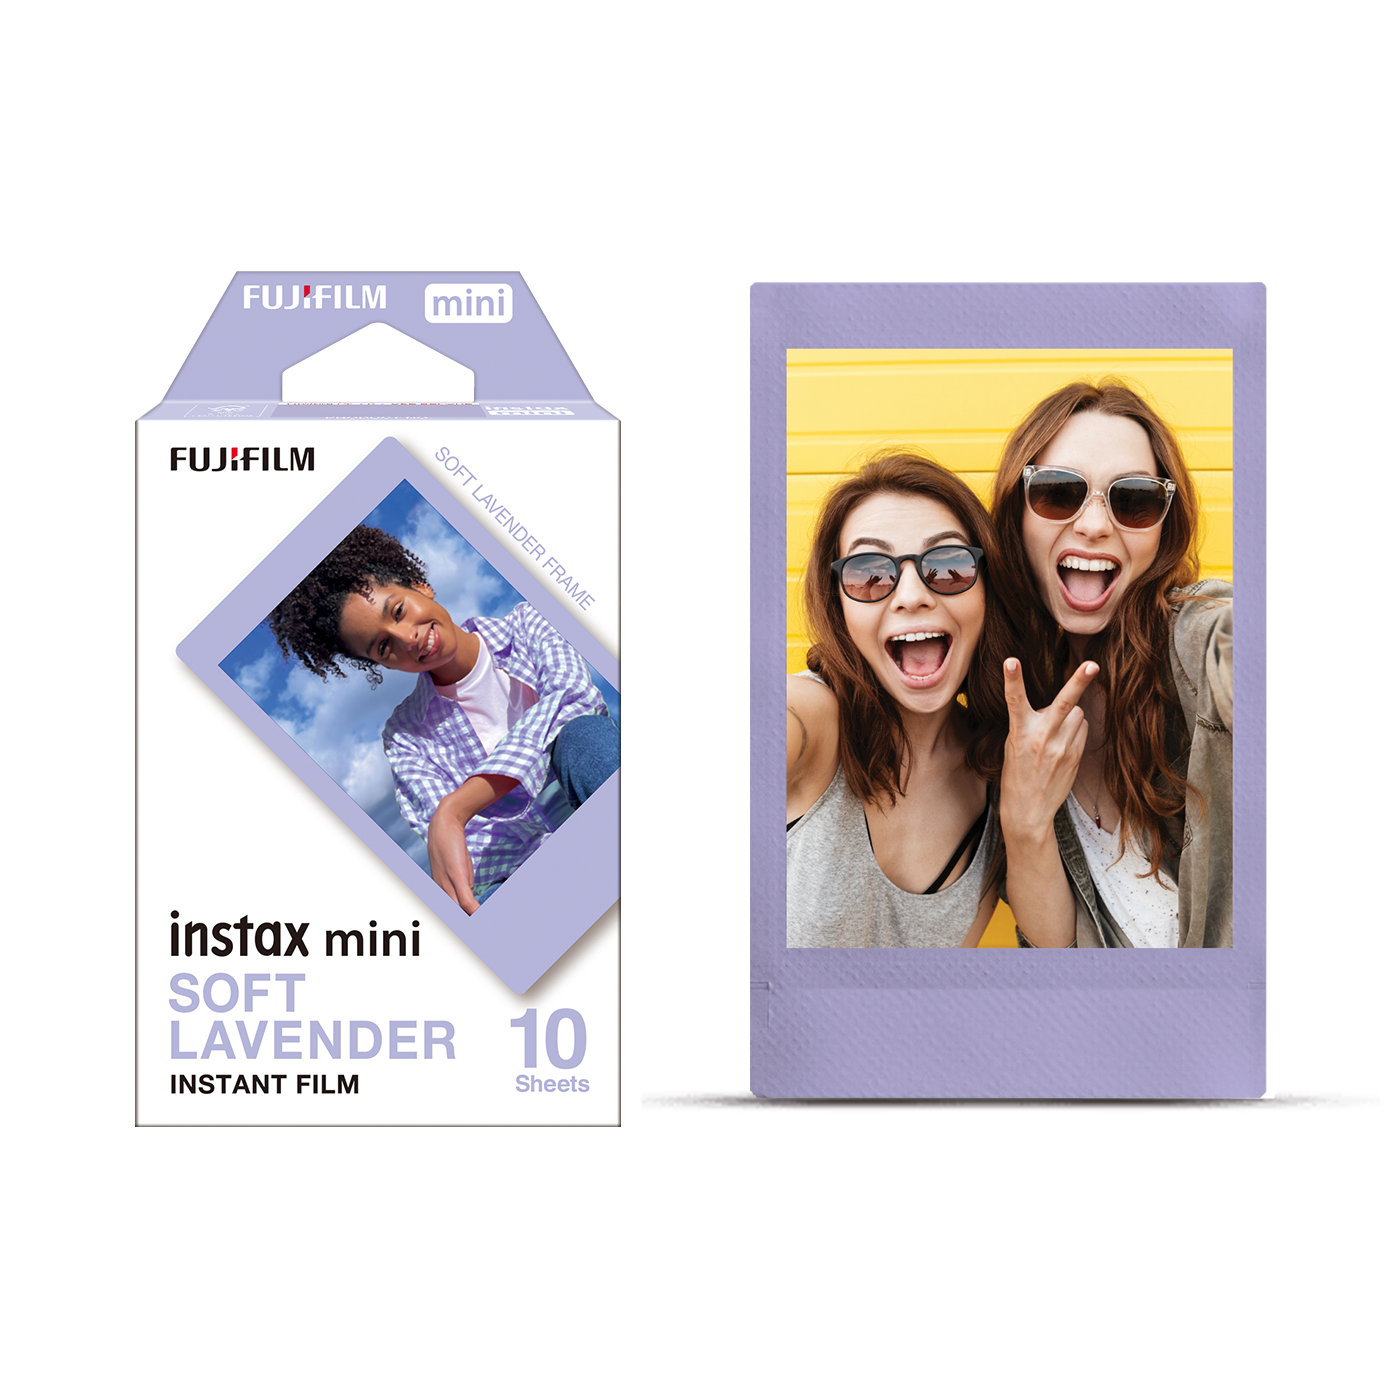 Fujifilm Film Instax Mini Air Mail (x10) - Papier photo instantané